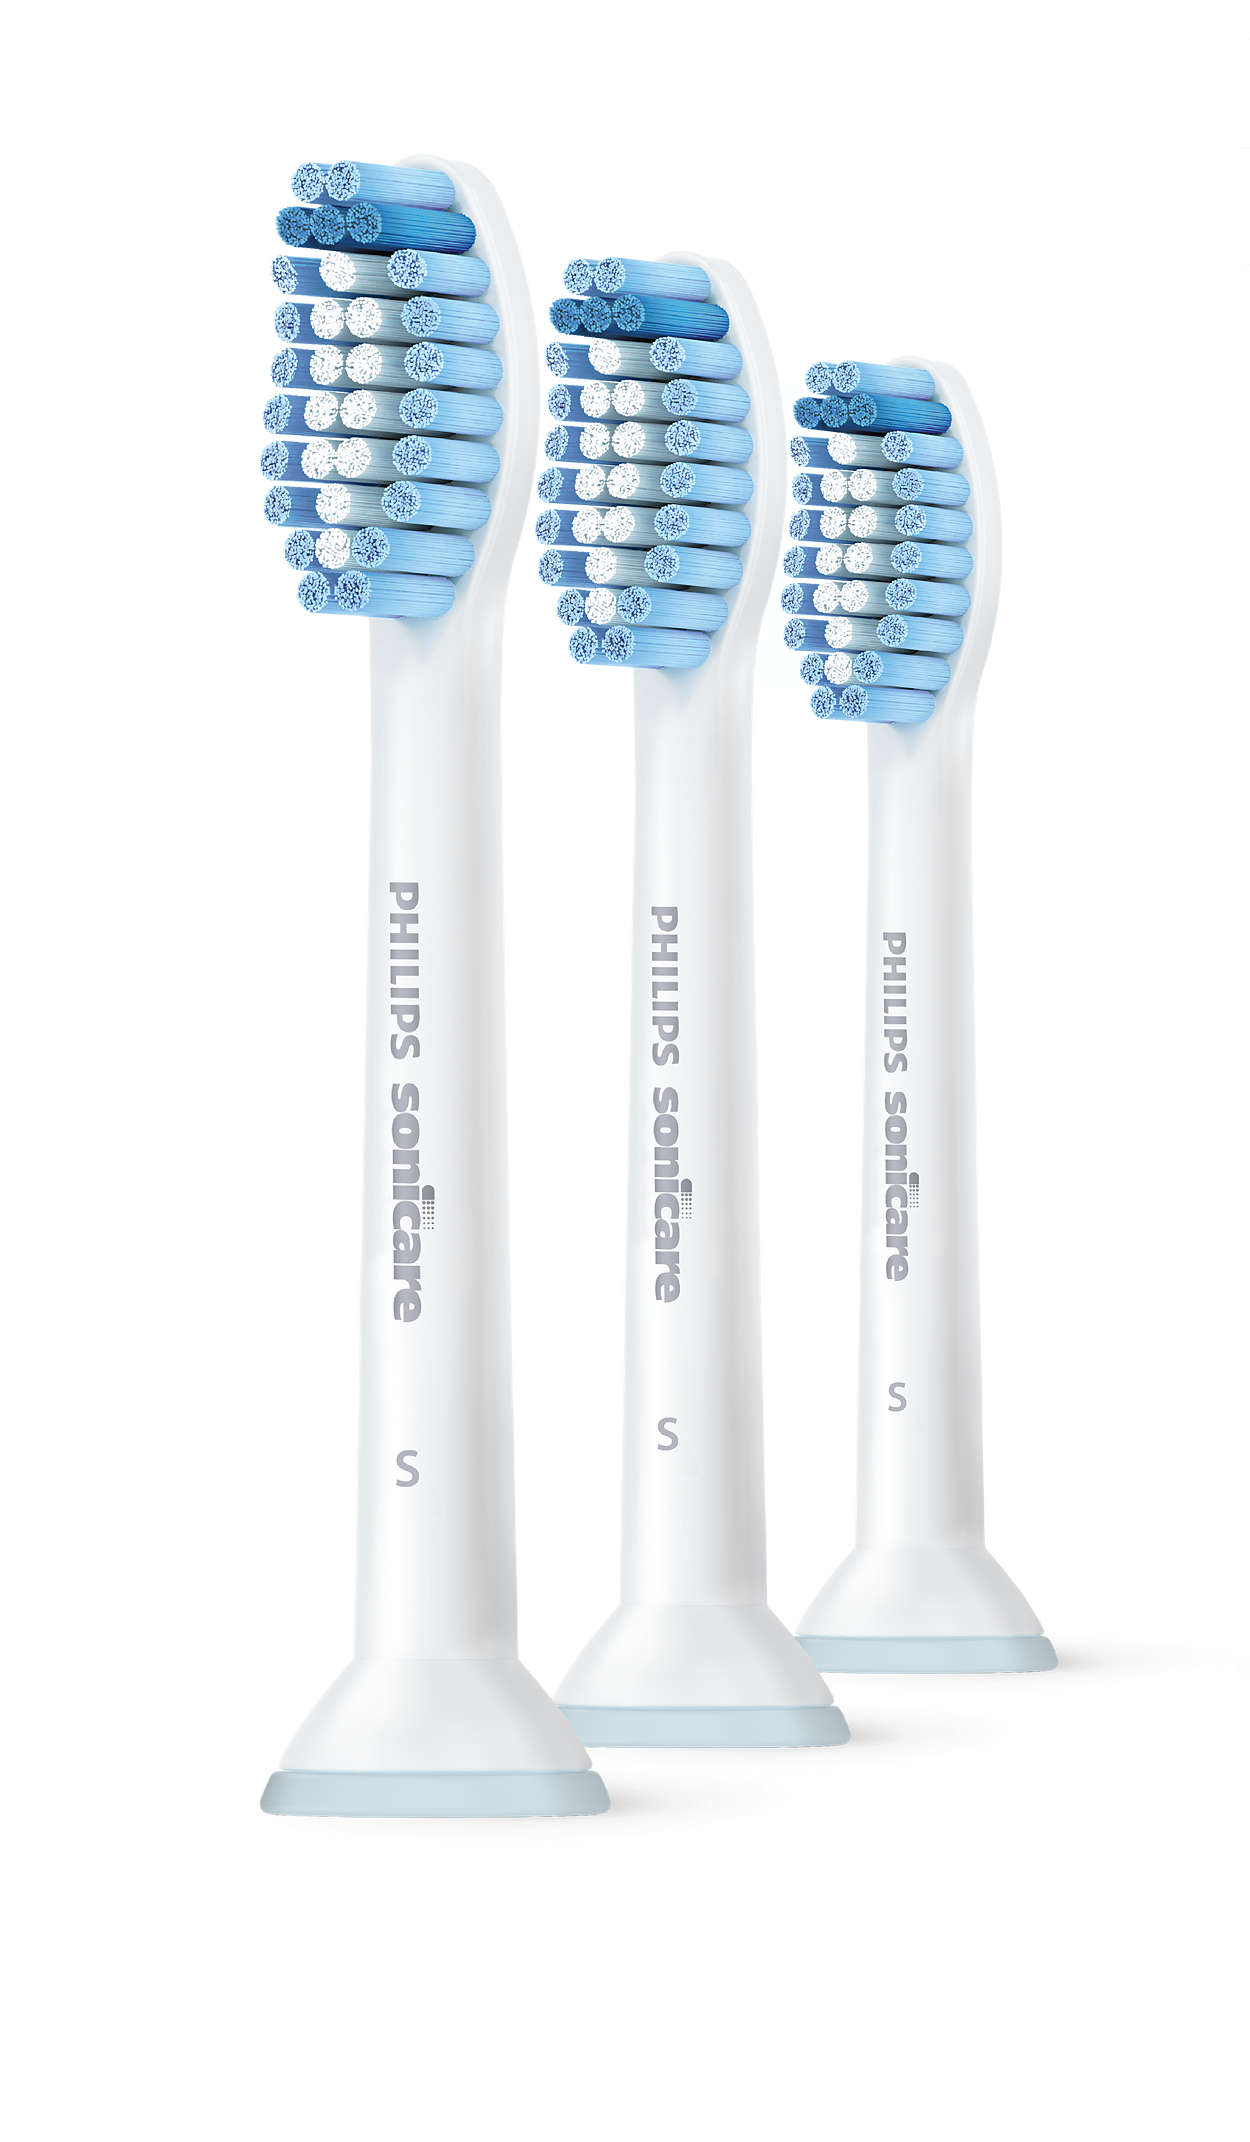 Panorama Six road S Sensitive Standard sonic toothbrush heads HX6053/64 | Sonicare